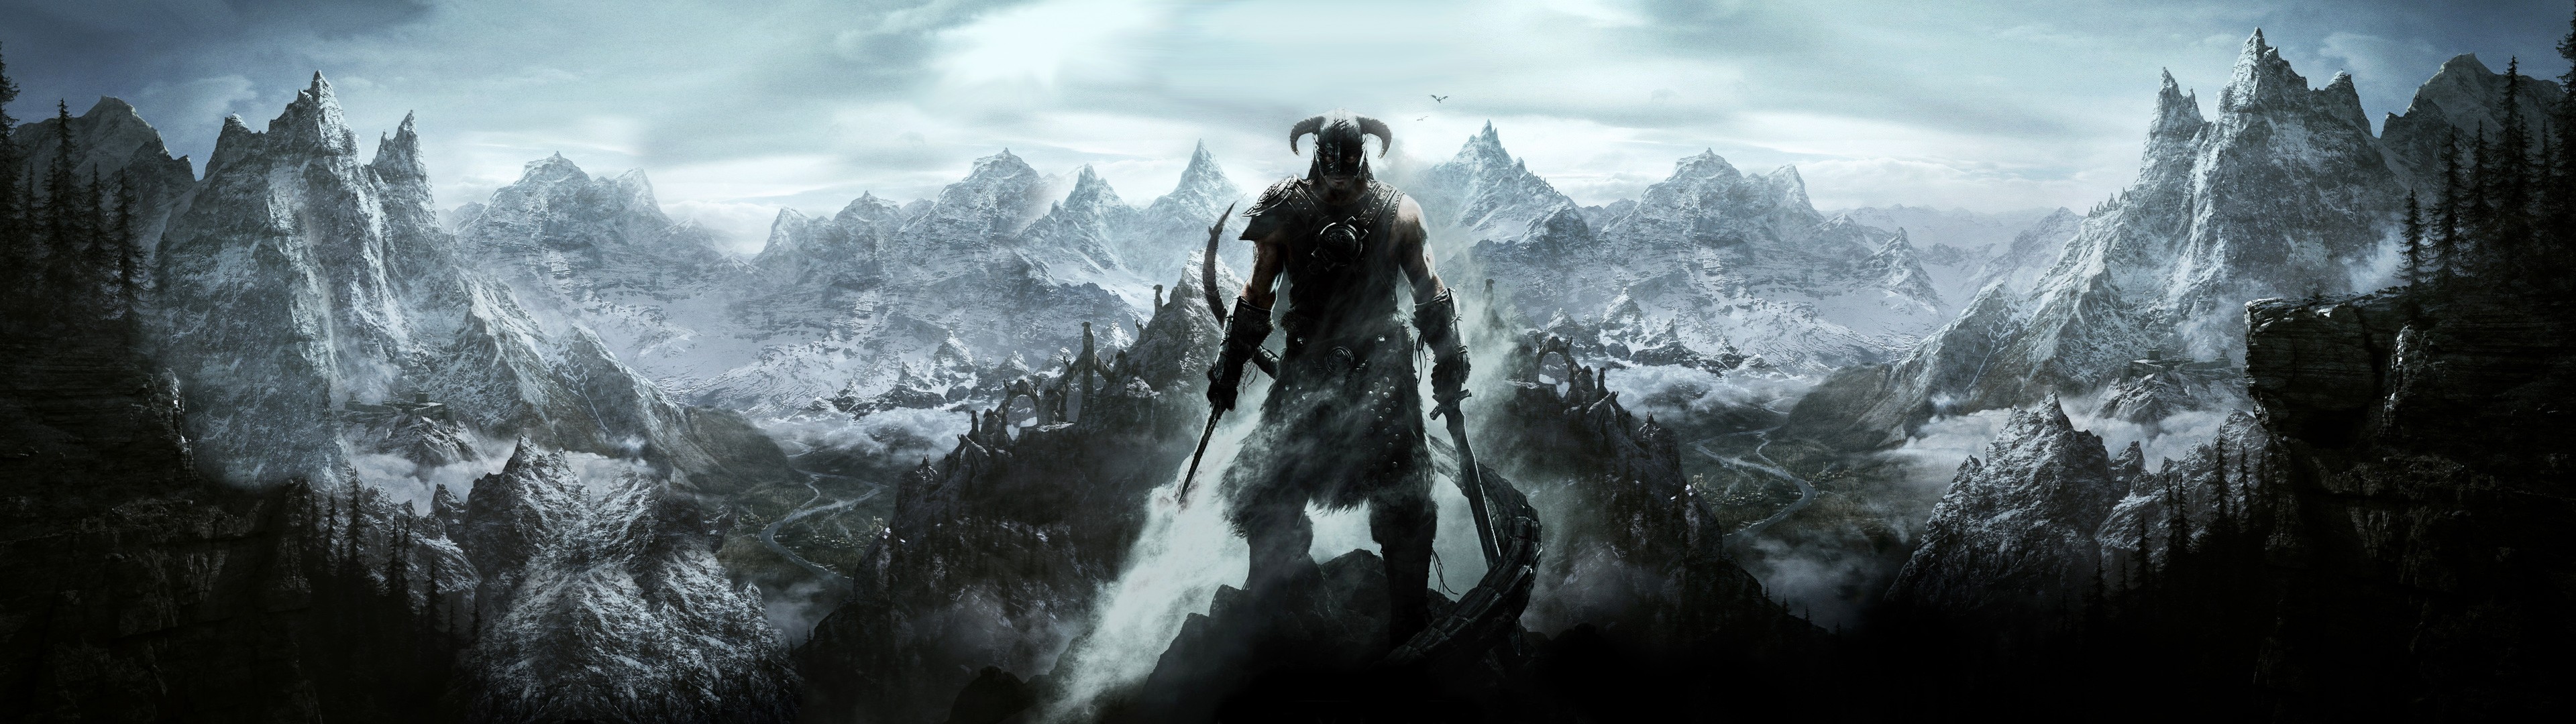 General 3840x1080 The Elder Scrolls V: Skyrim mountains snow fantasy art sword video games landscape PC gaming video game art snowy peak fantasy men